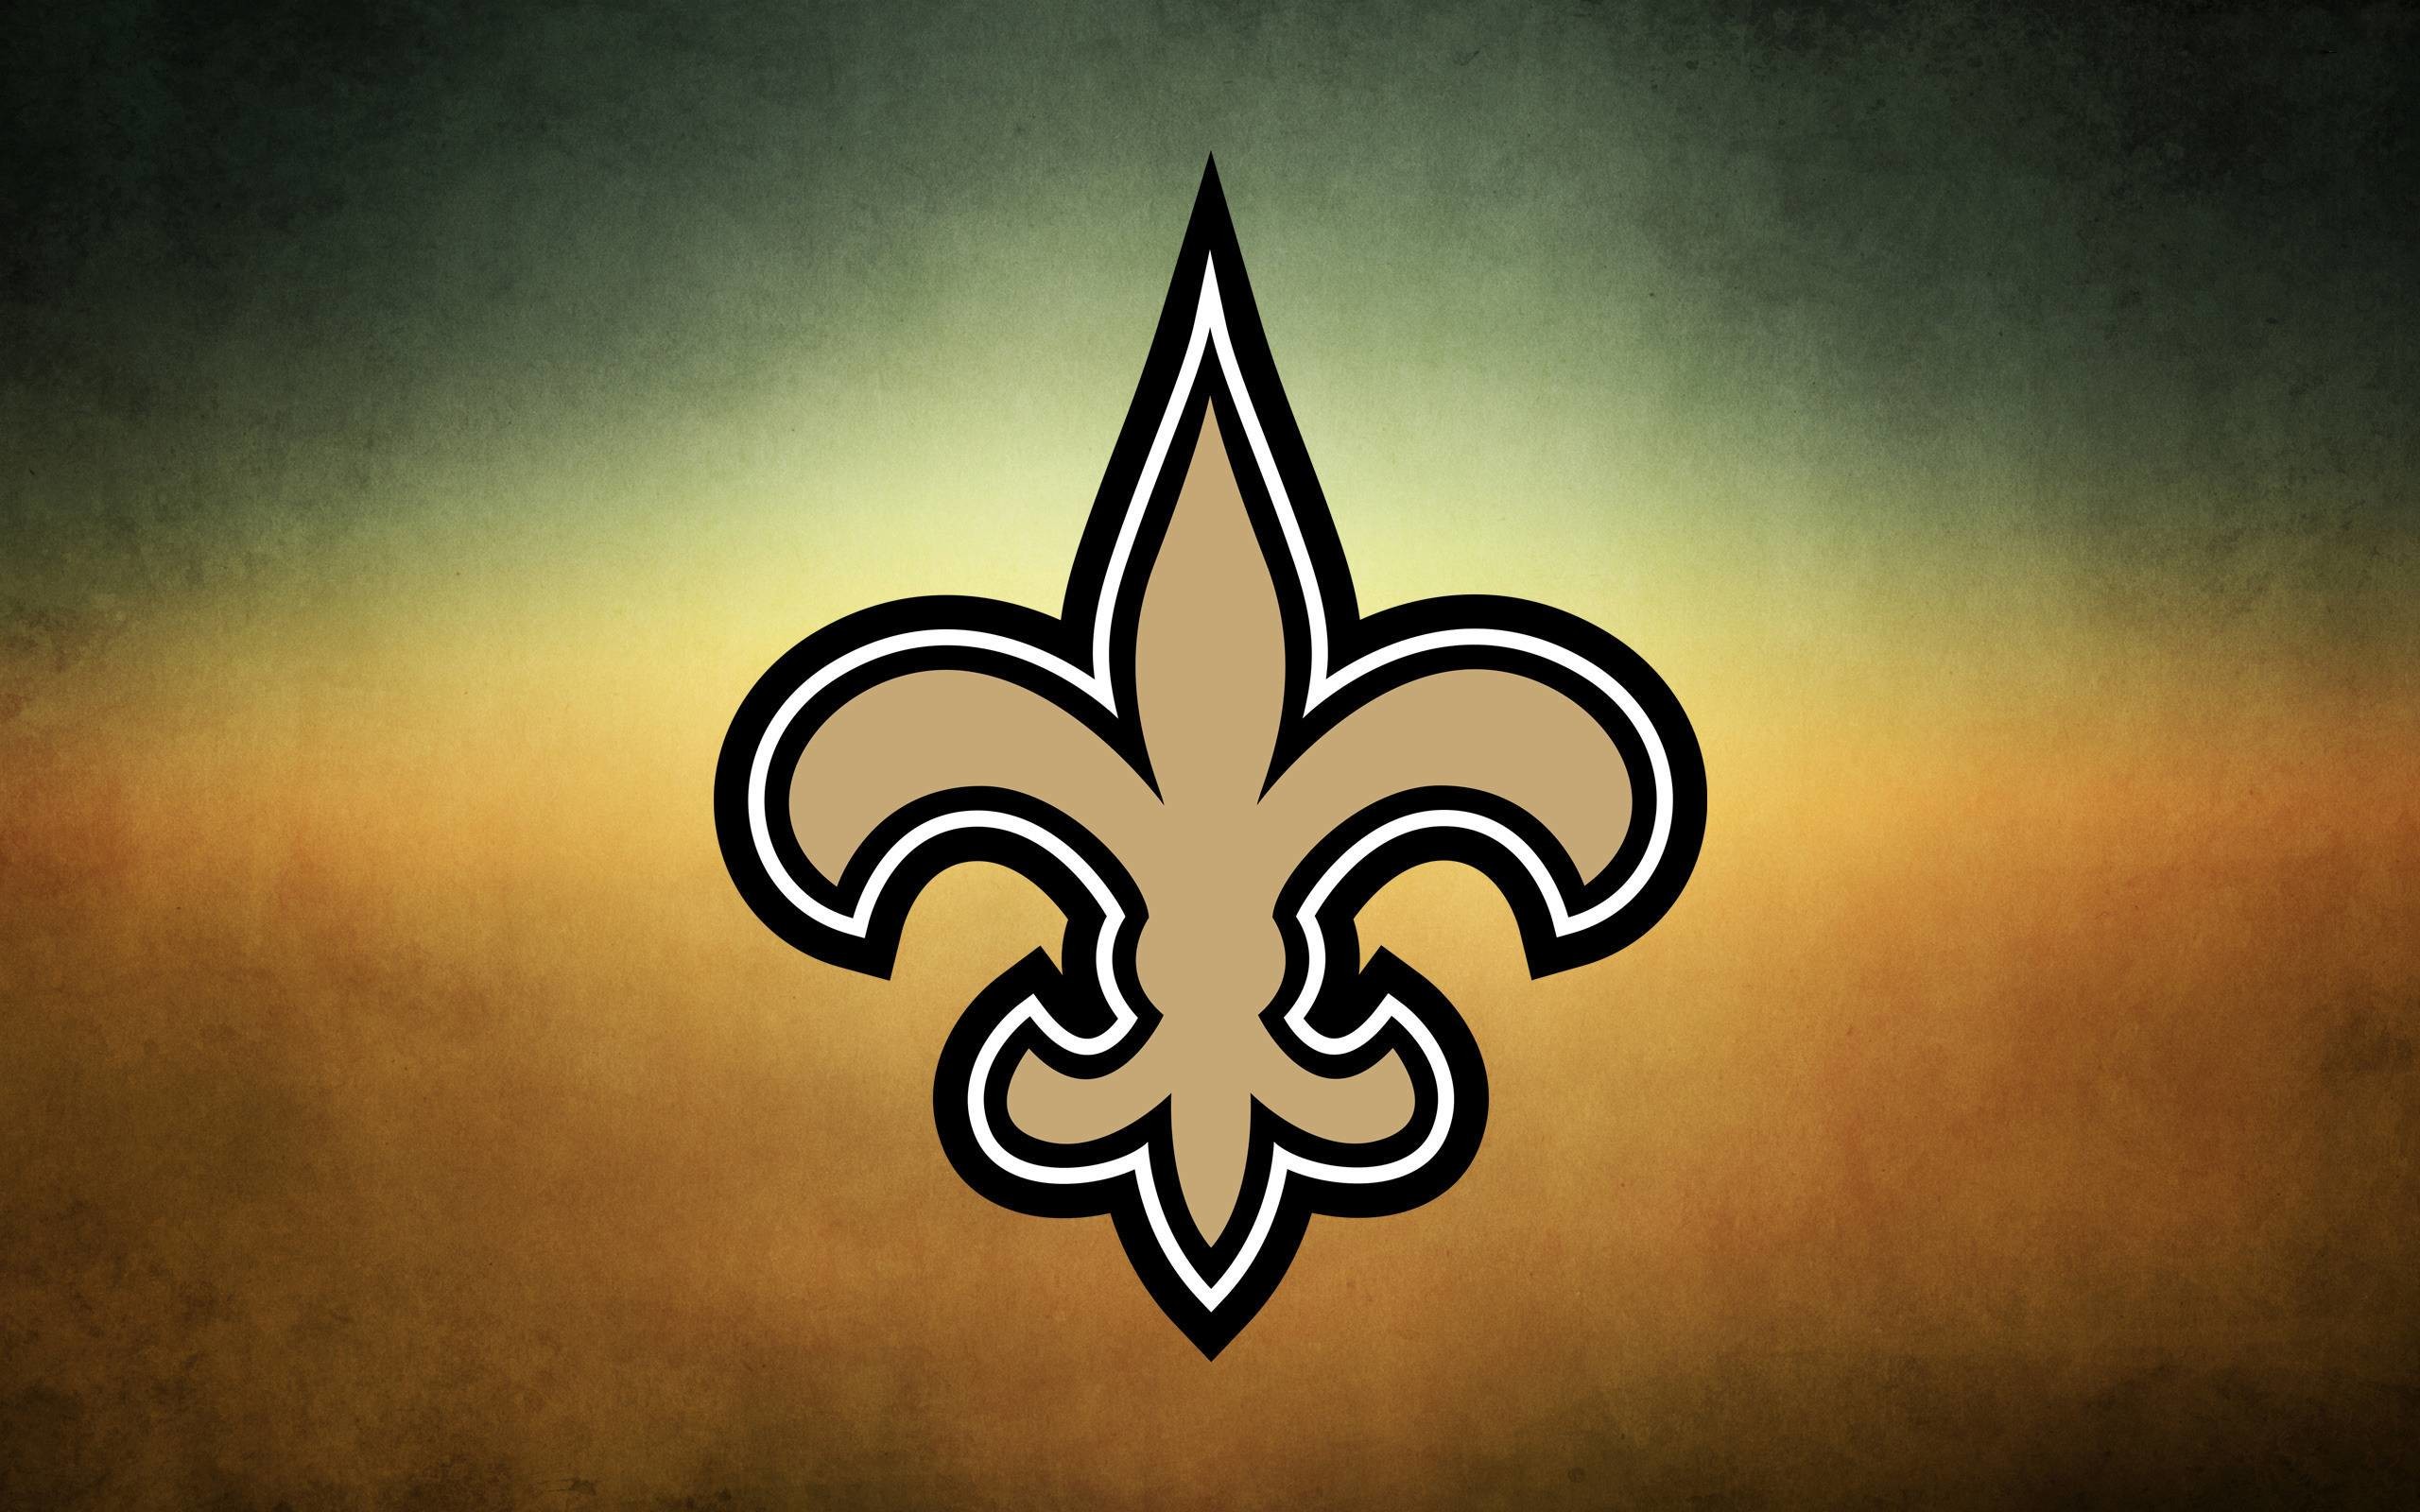 New Orleans Saints 2021 schedule Download mobile desktop wallpaper